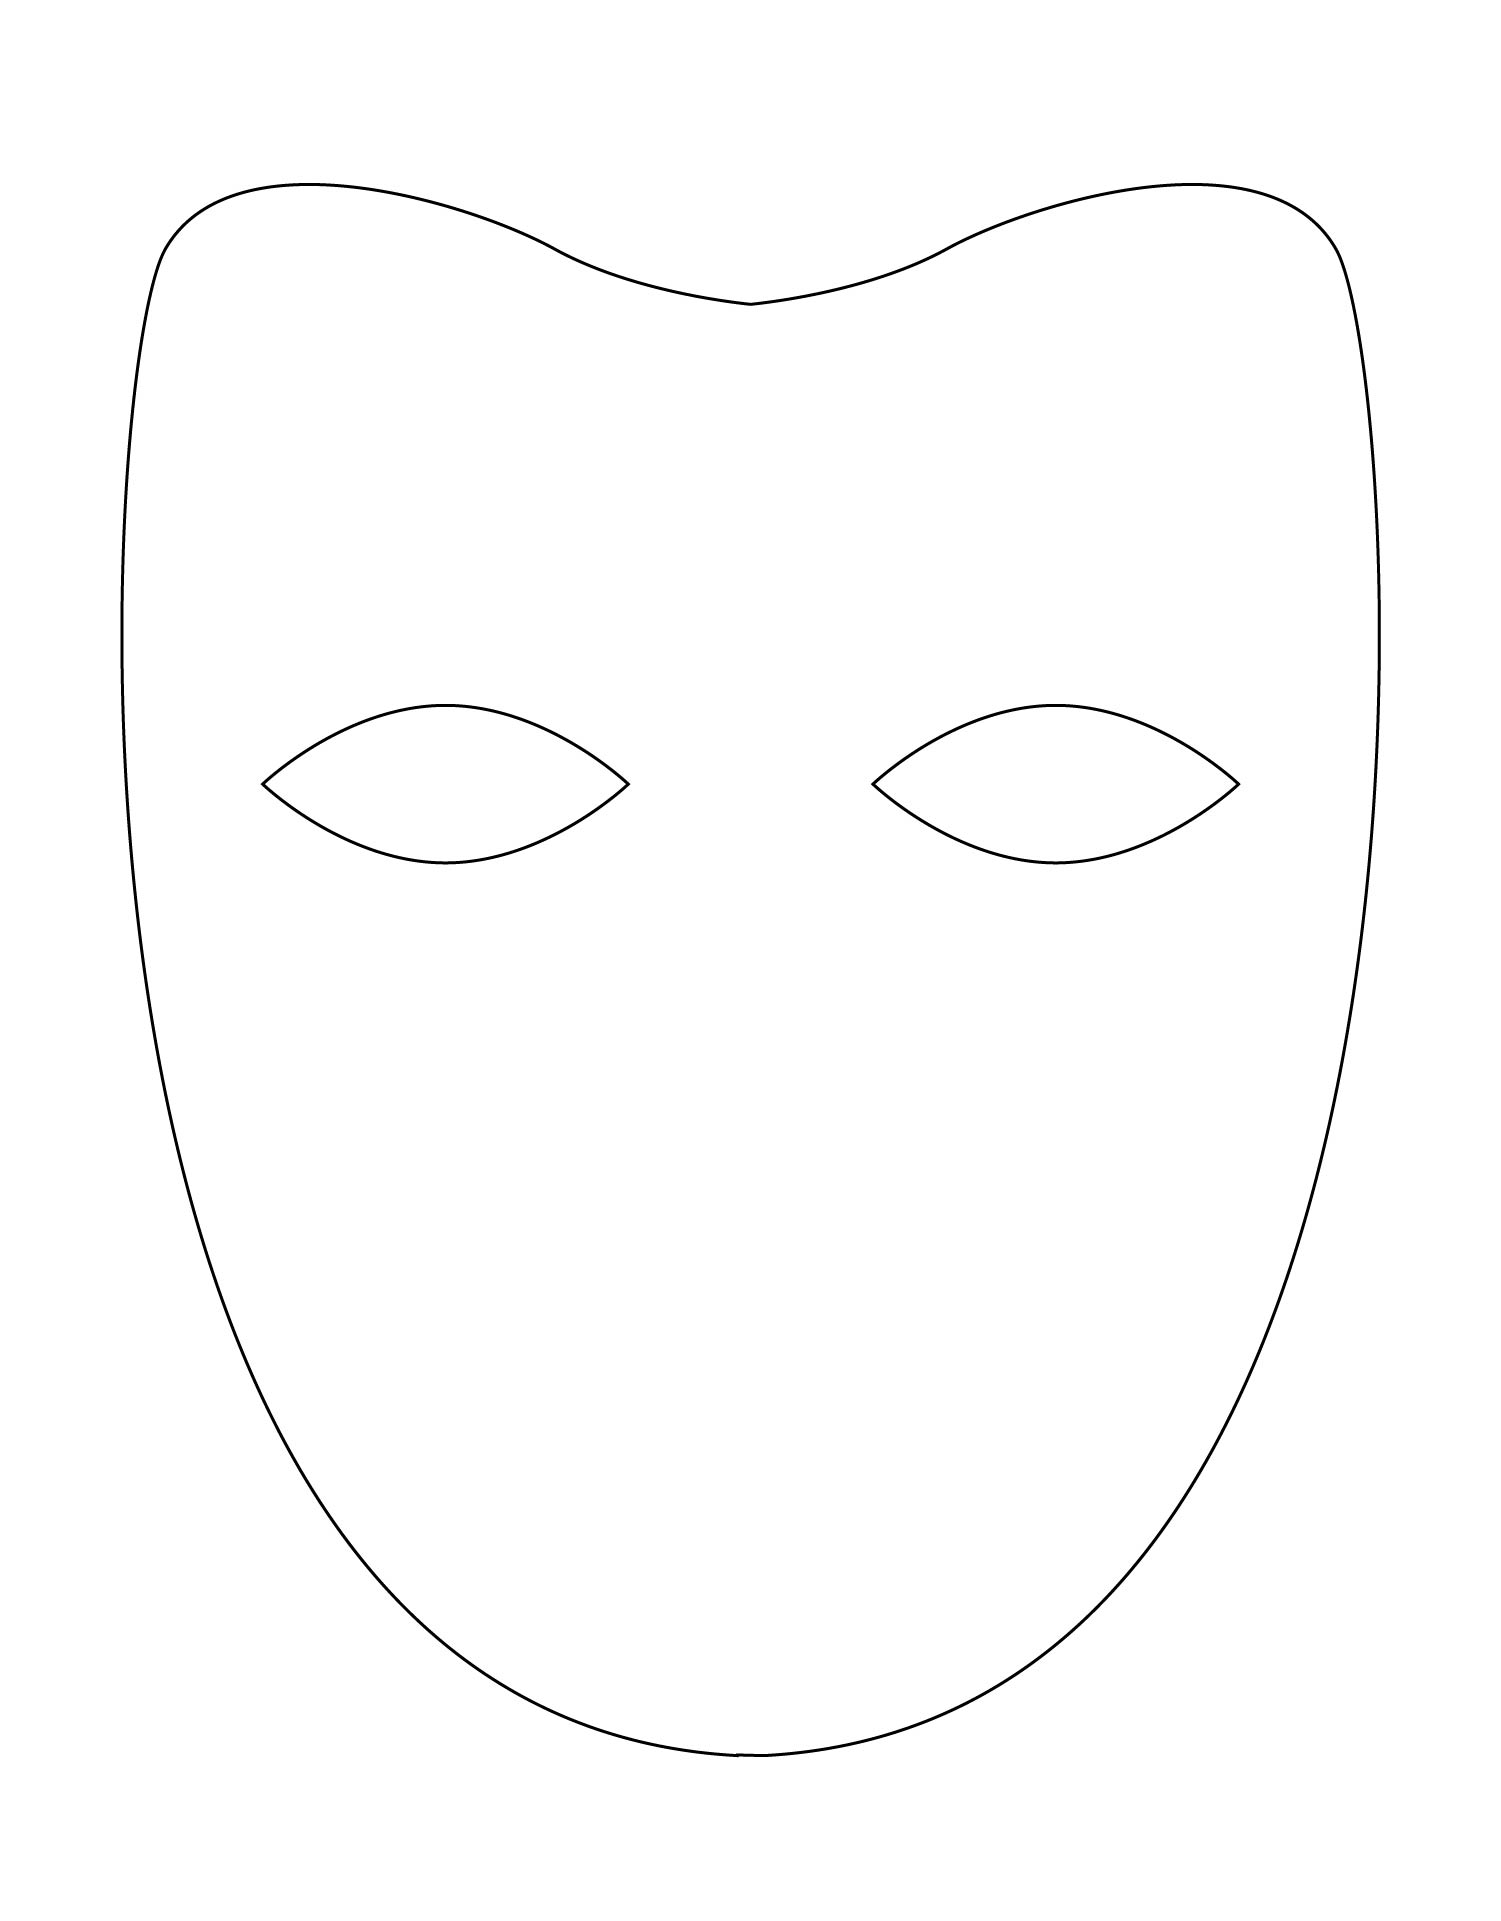 Full Face Mask Template